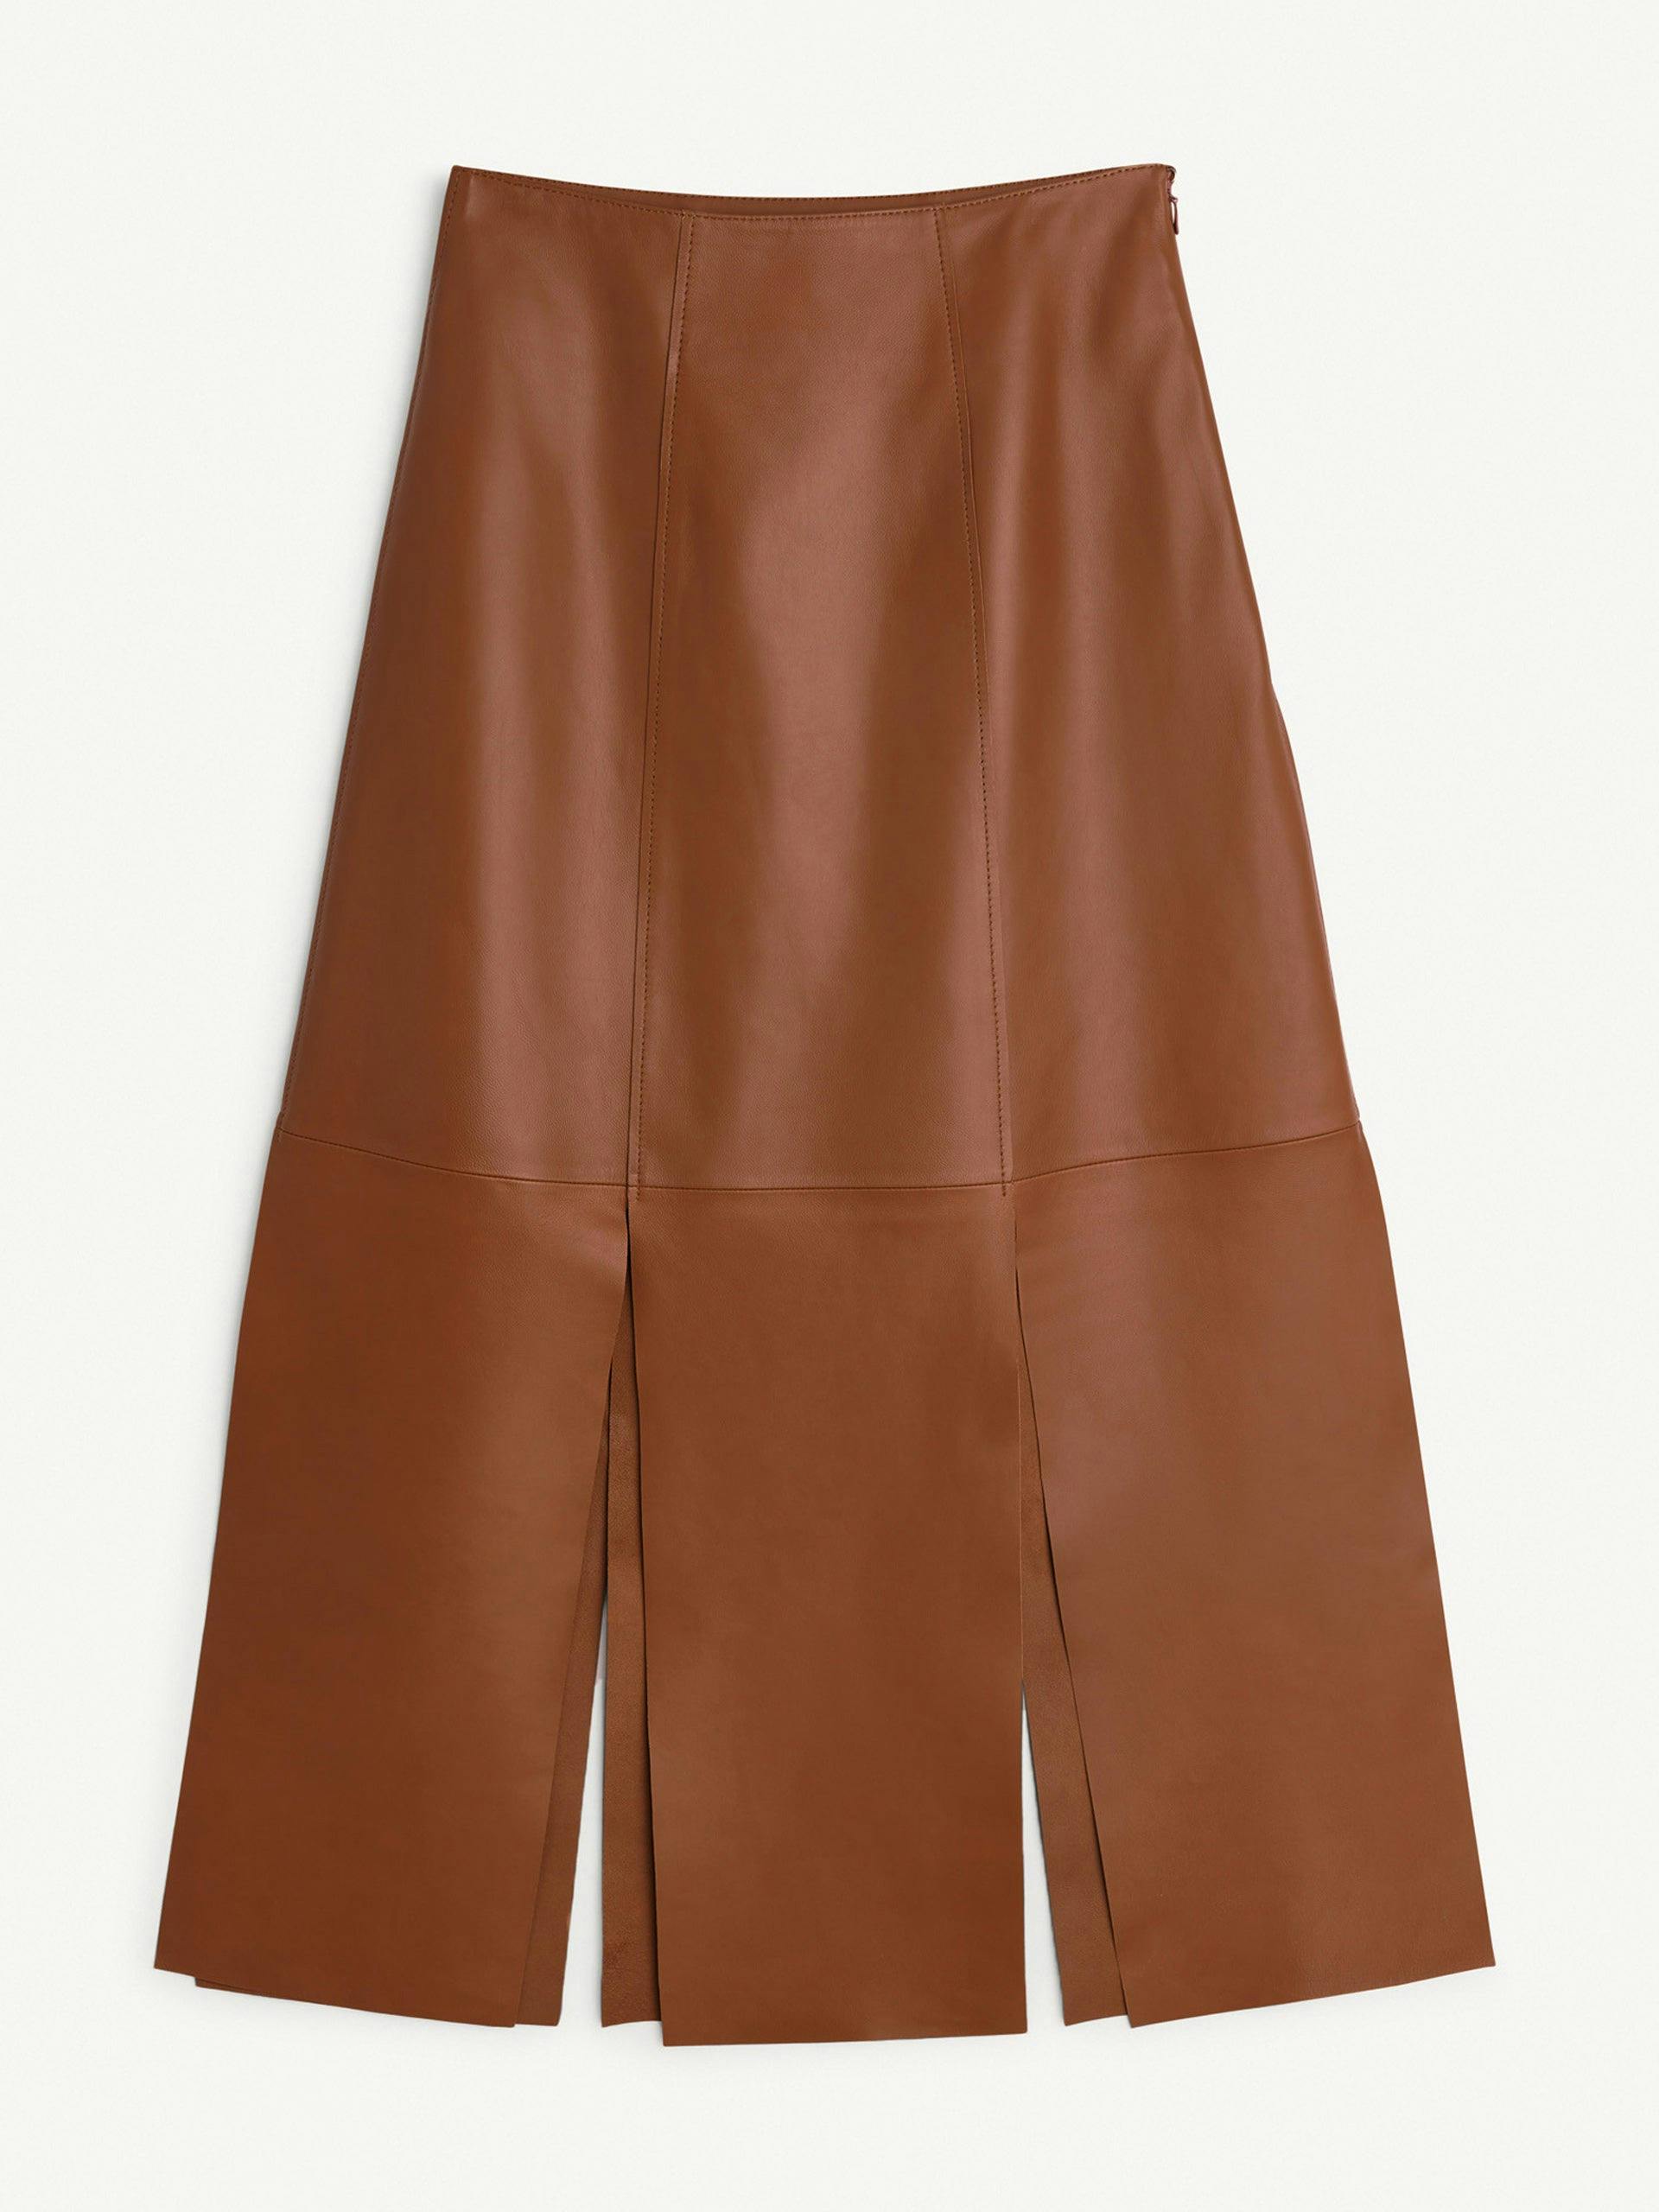 Lunes leather skirt in dark tan